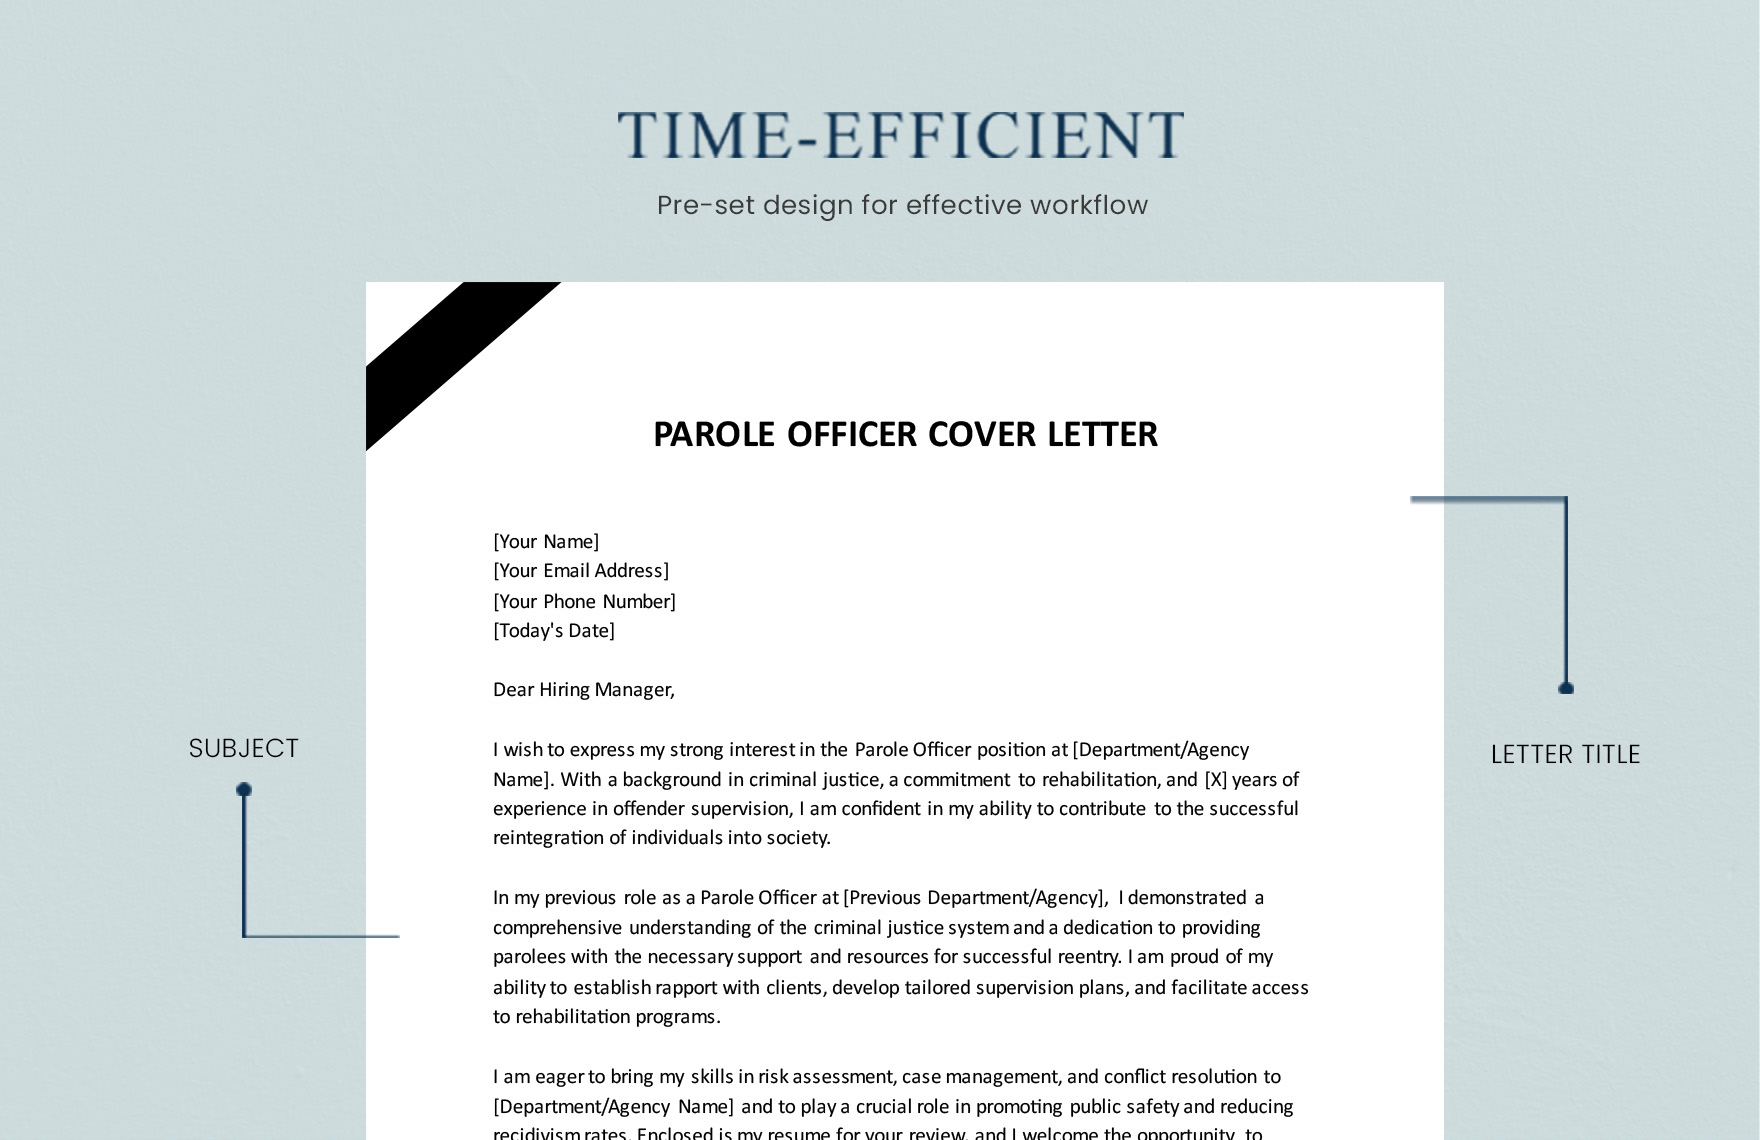 Parole Officer Cover Letter